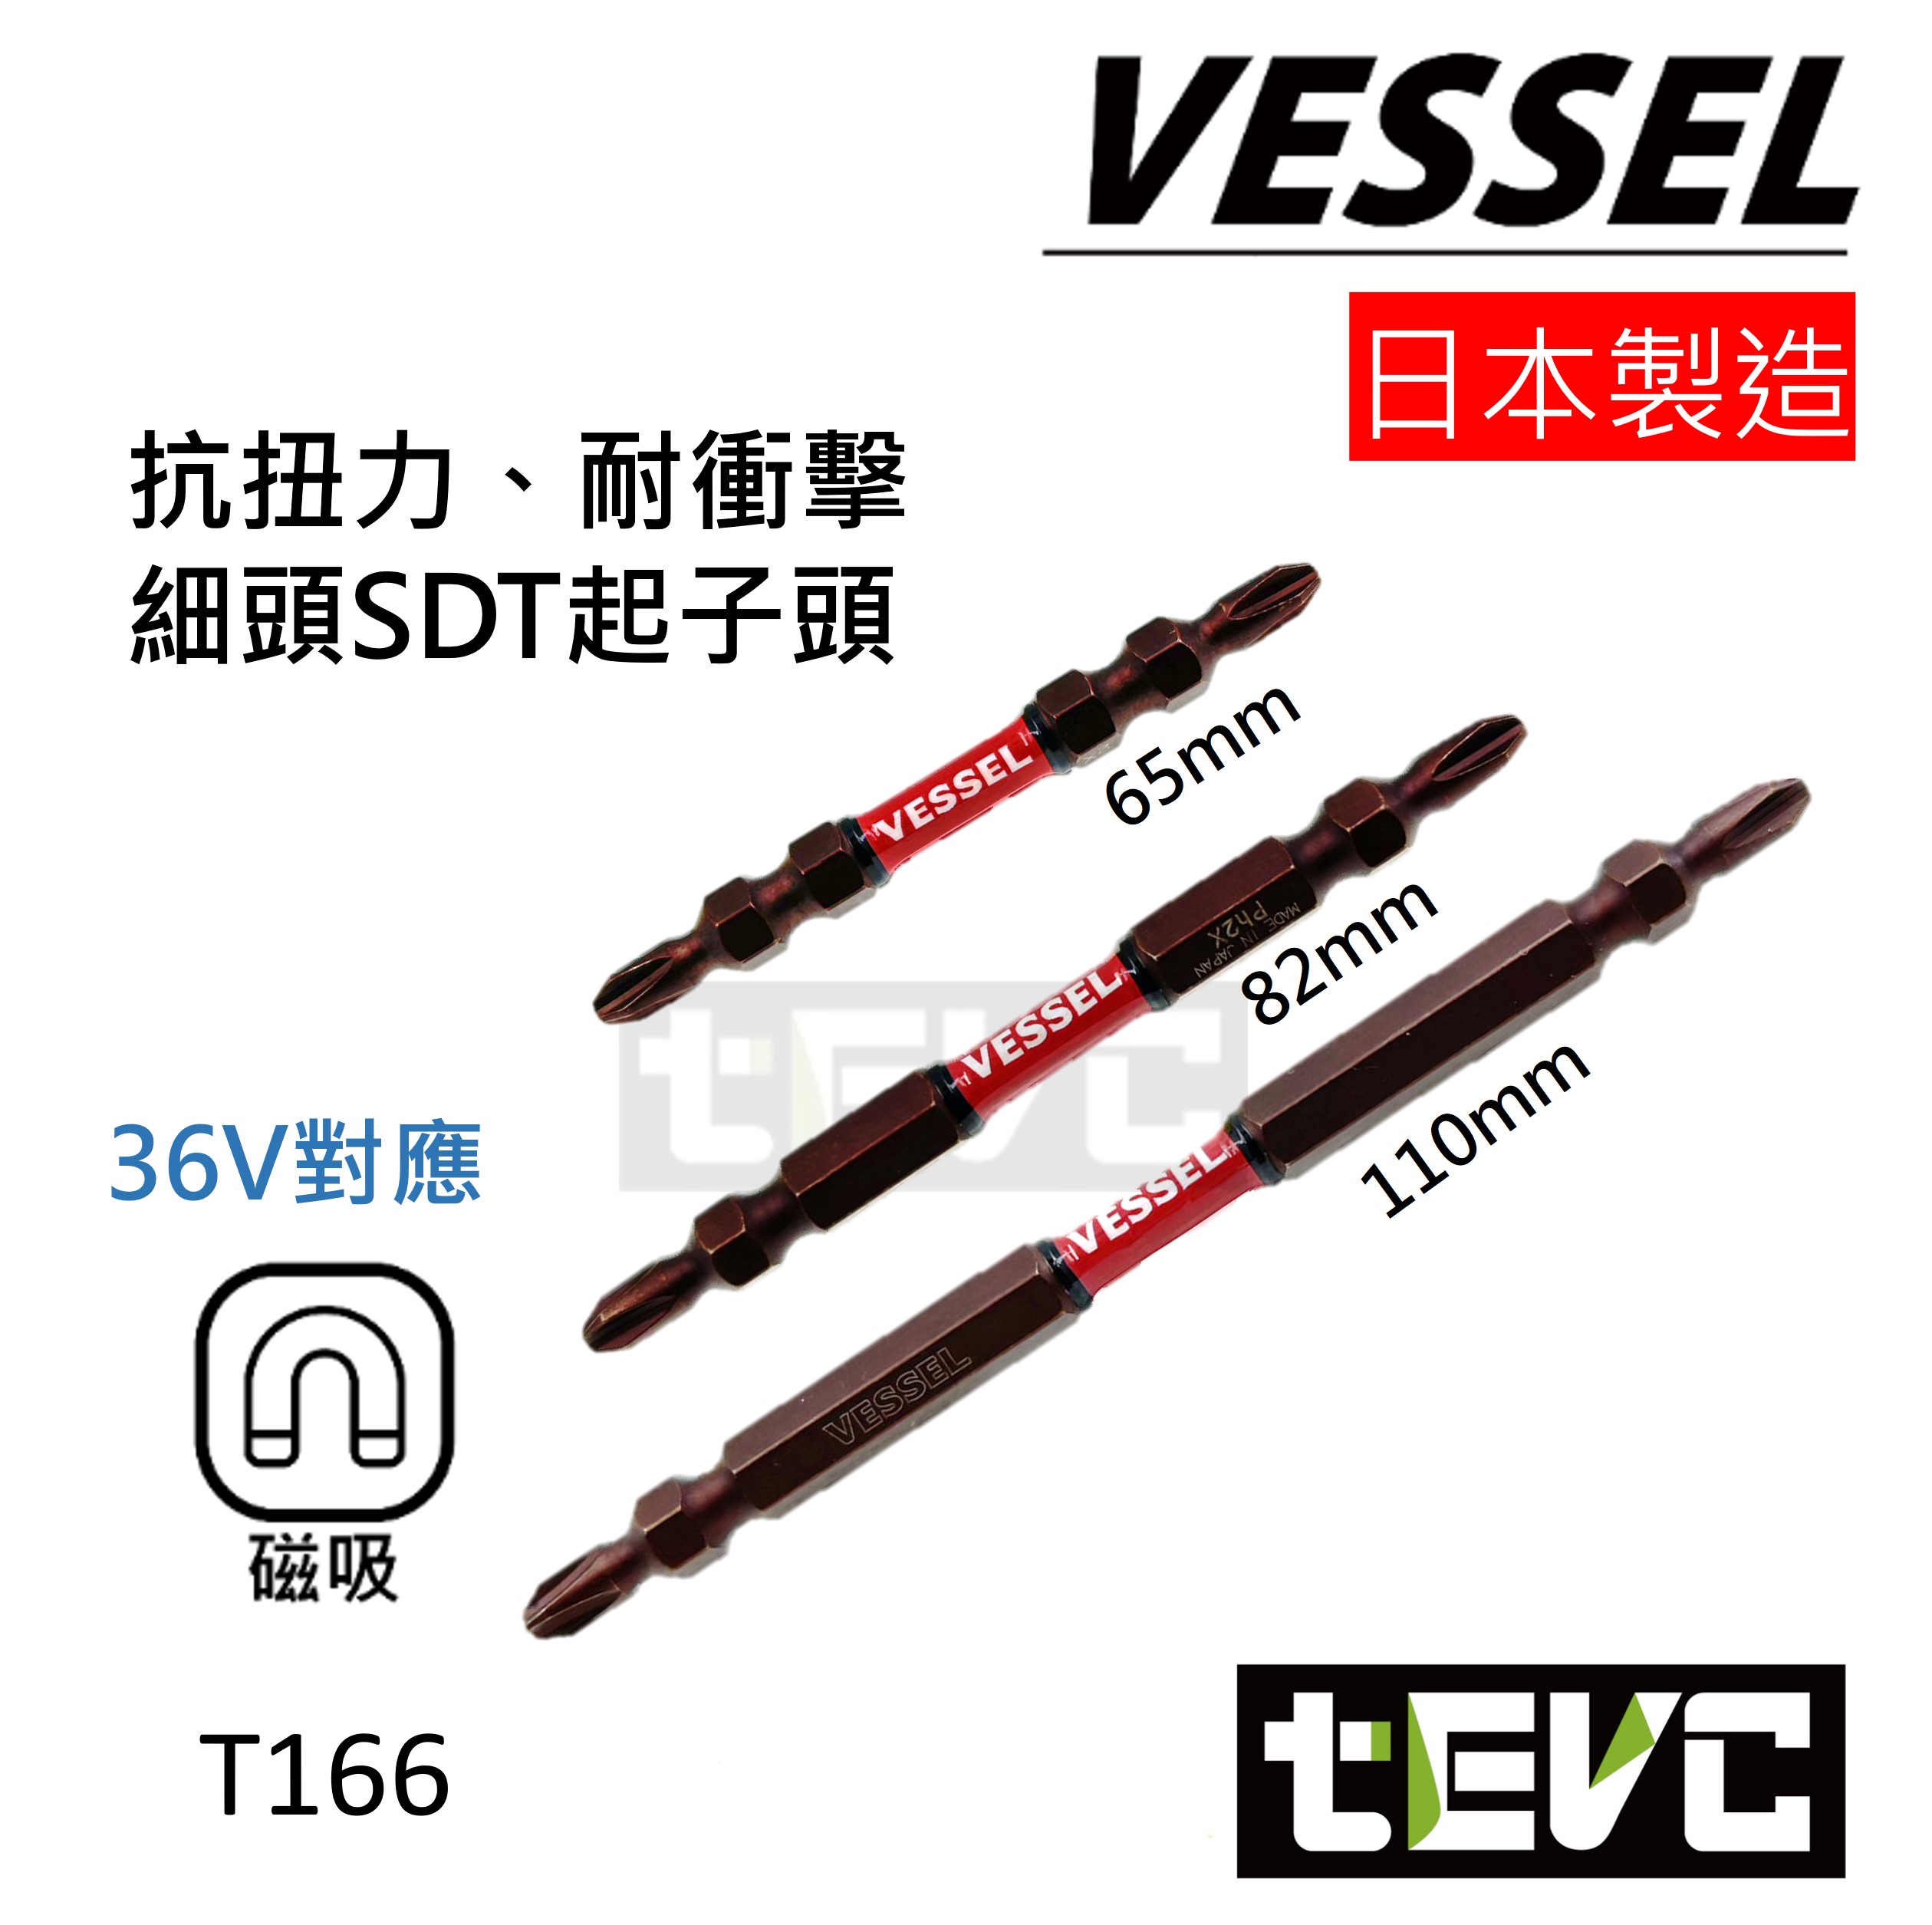 《tevc》日本製 VESSEL 高扭力 抗扭 細頭 起子頭 小蠻腰 衝擊 電動 起子 65mm 82mm 110mm